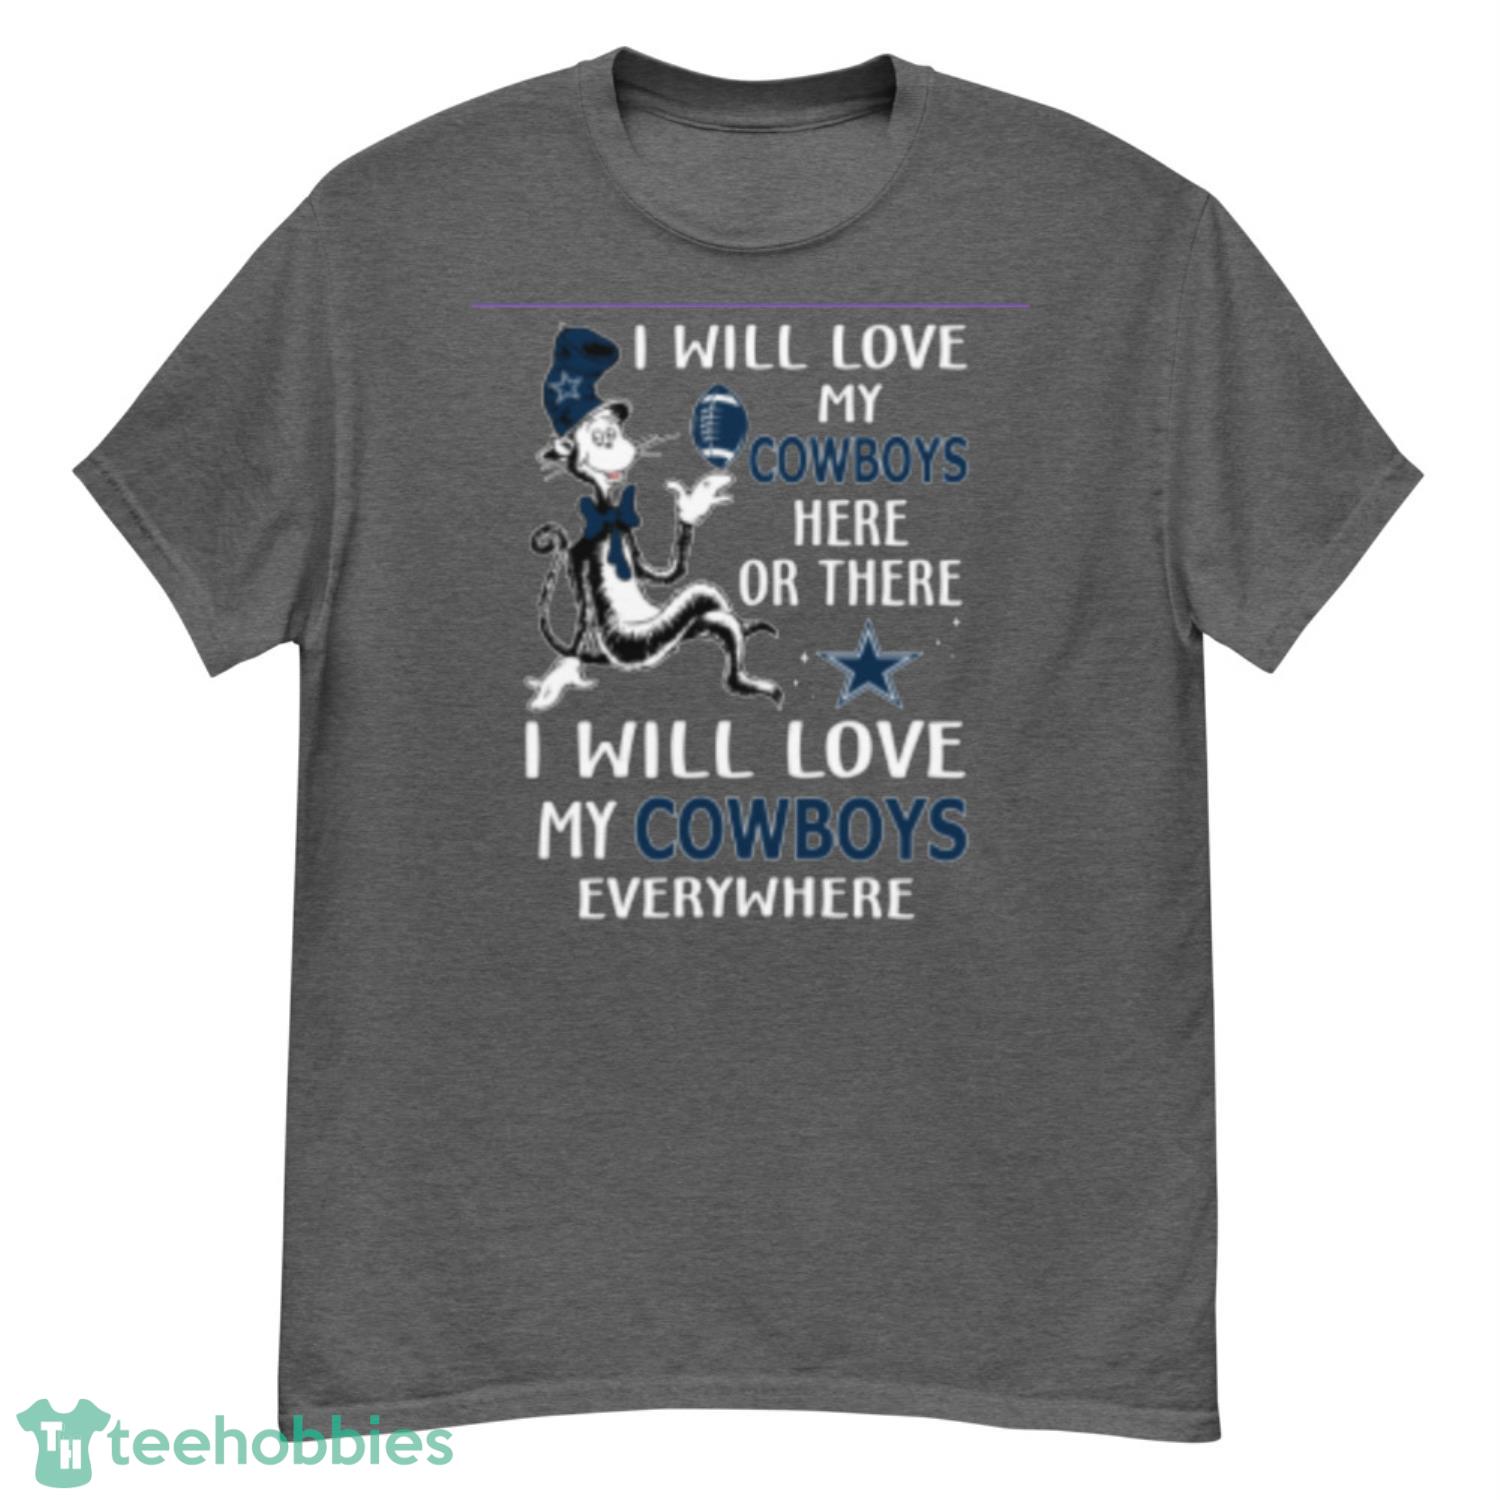 The Cowboys Fooball Dallas Cowboys T-shirt, Football Shirt For Fan